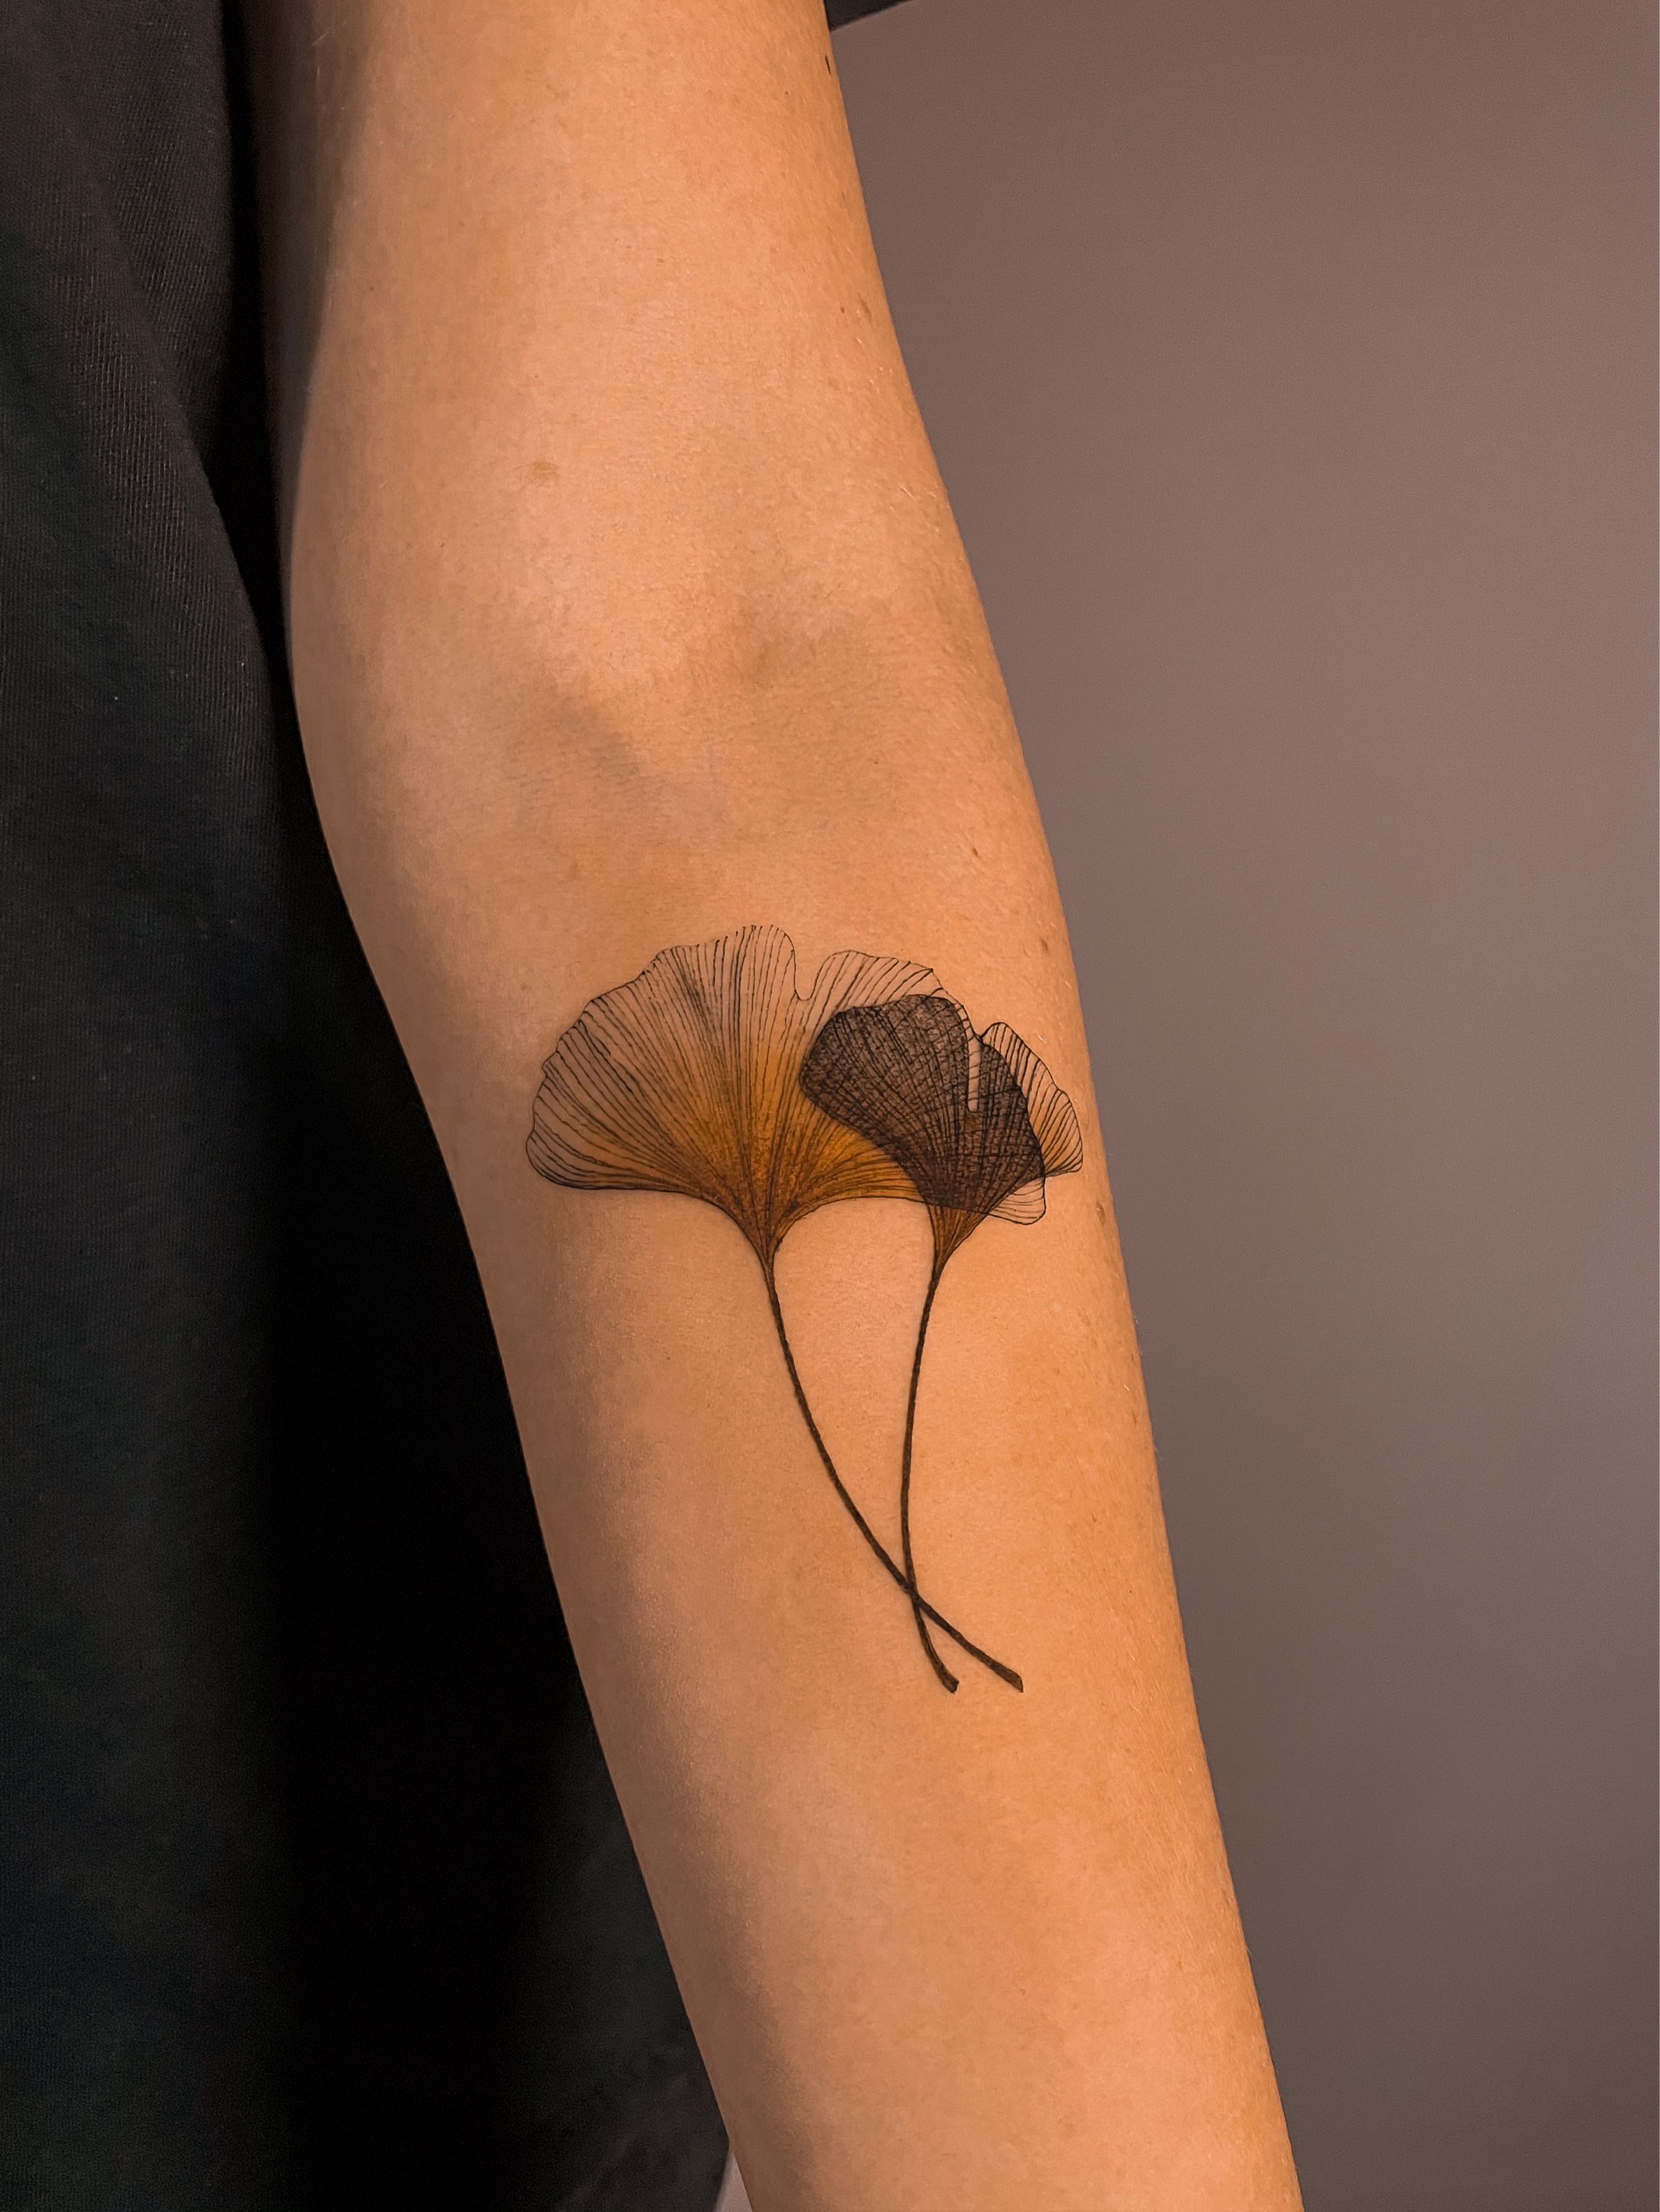 Gingko biloba tattoo by Annelie Fransson - Tattoogrid.net